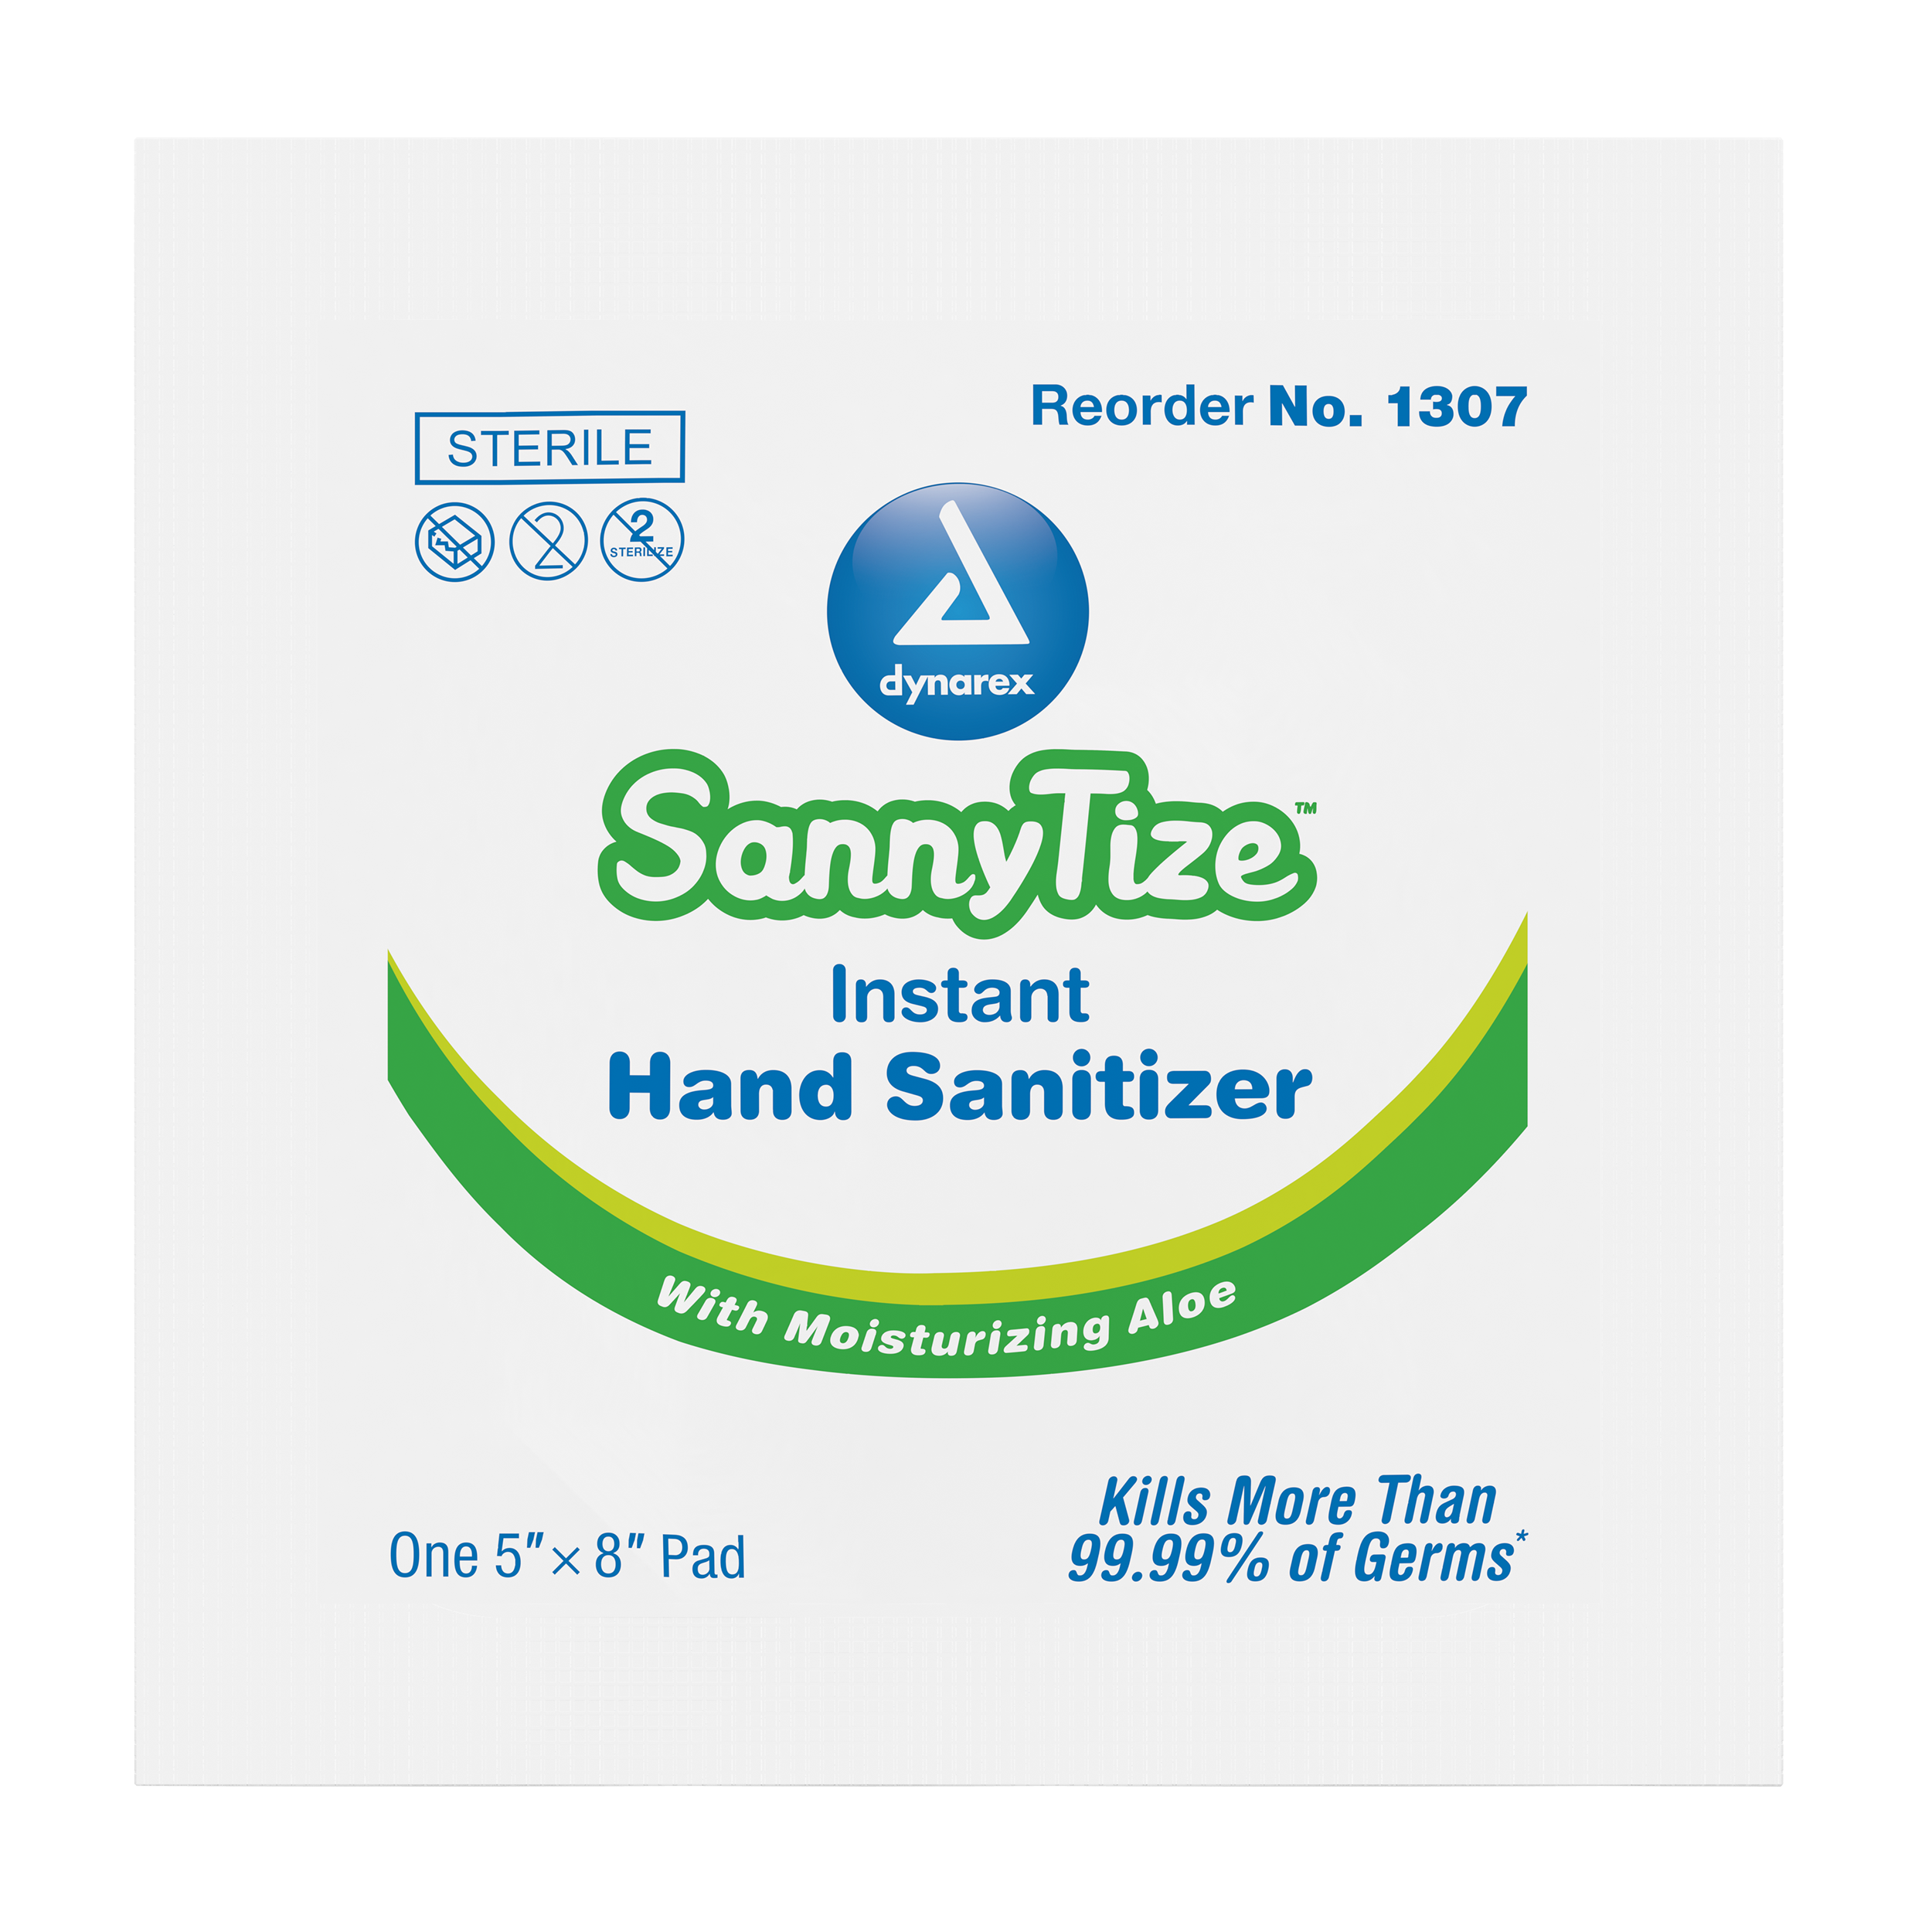 1307 Dynarex单独包装sanytizer即时洗手液雨刷含有70%的酒精